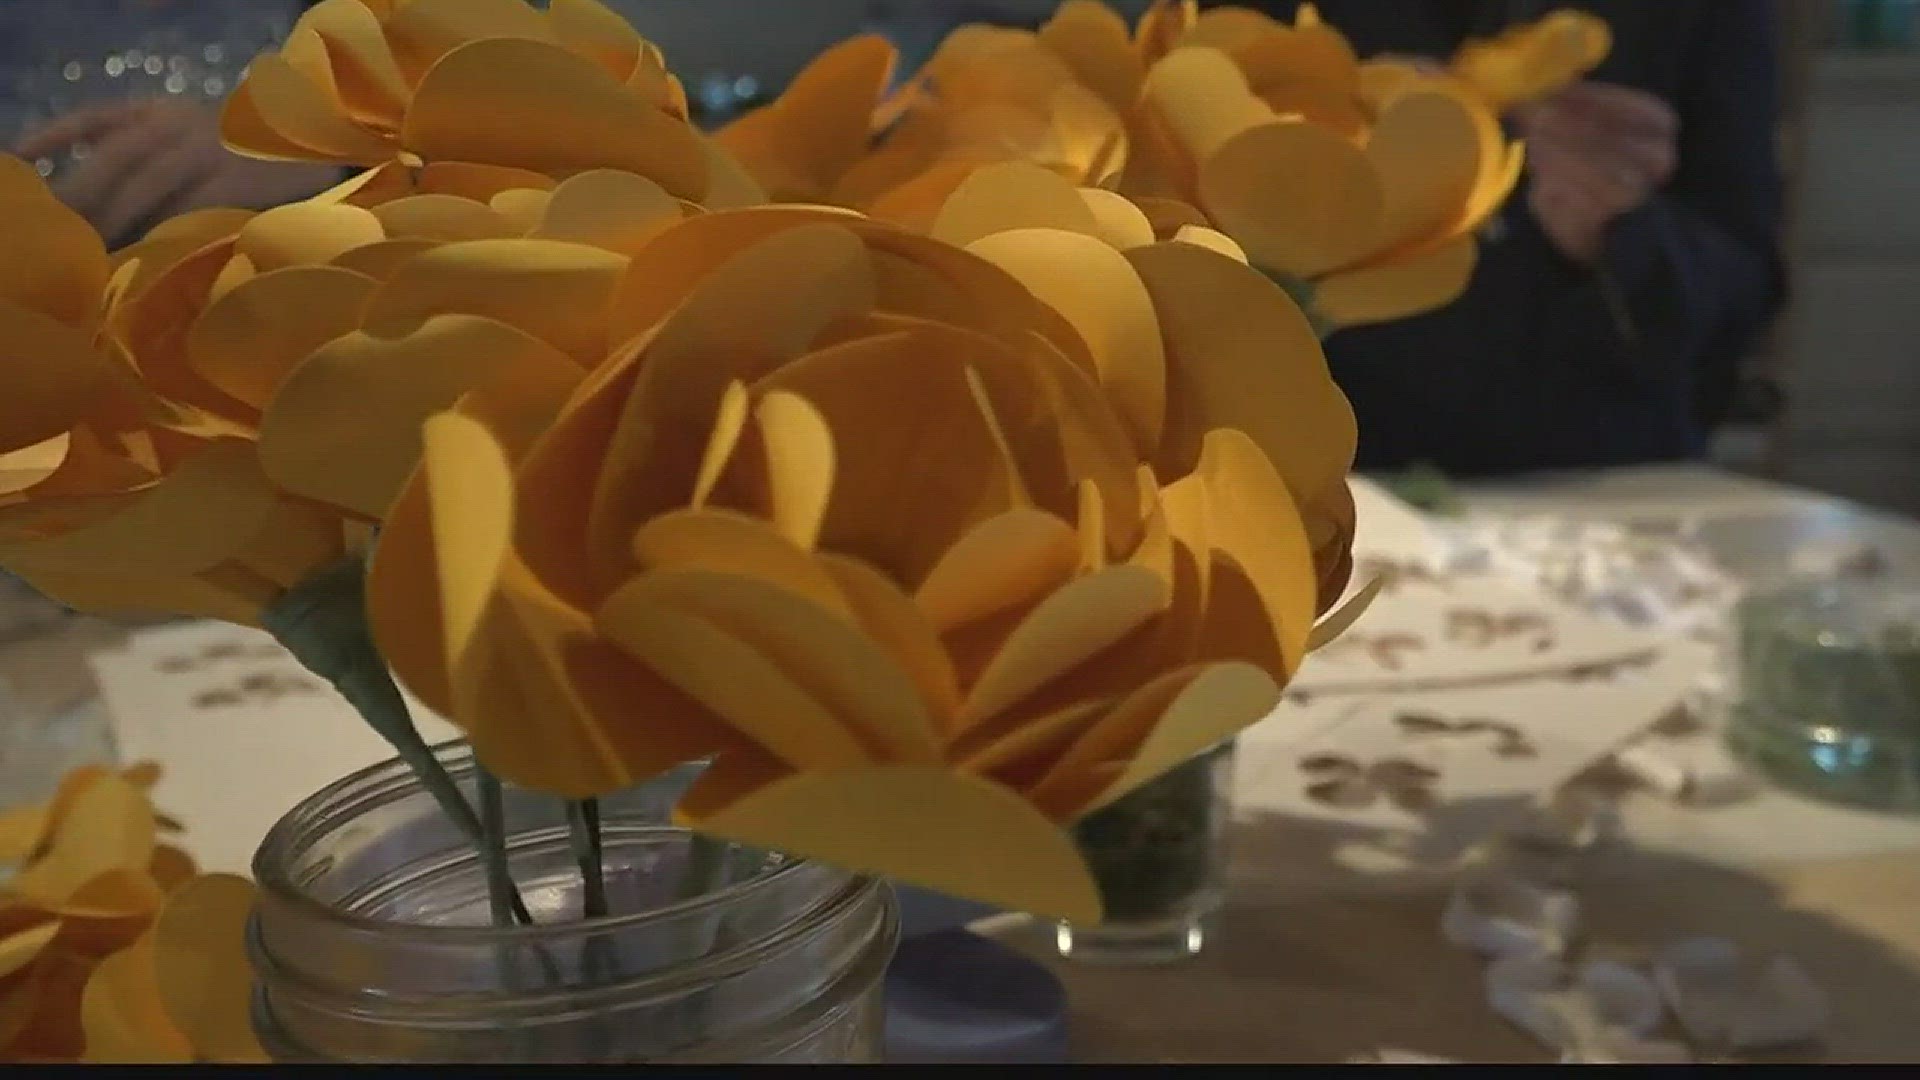 Volunteers help make flowers for Sam Strahan's memorial service (9-21-17)